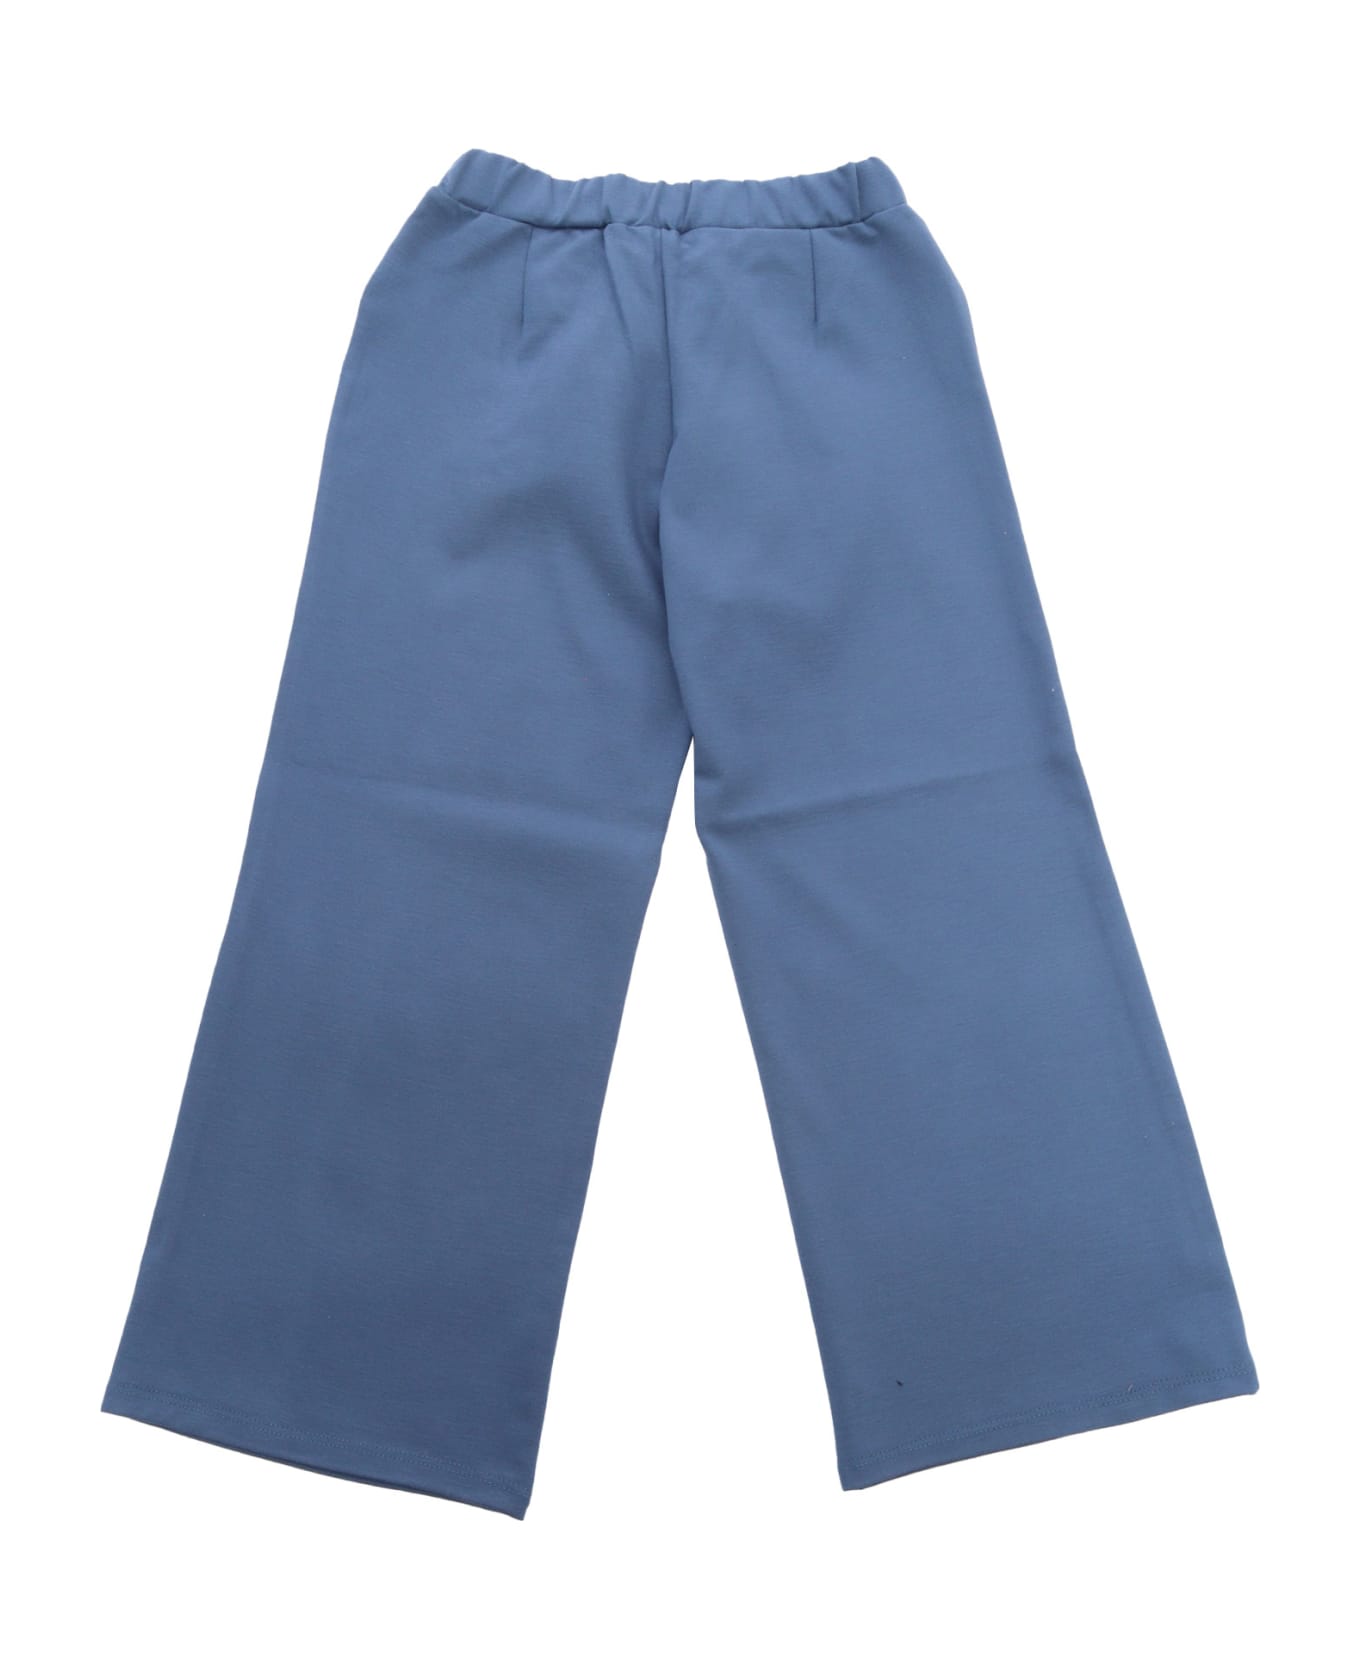 Magil Milano Stitch Gaucho Pants - LIGHT BLUE ボトムス